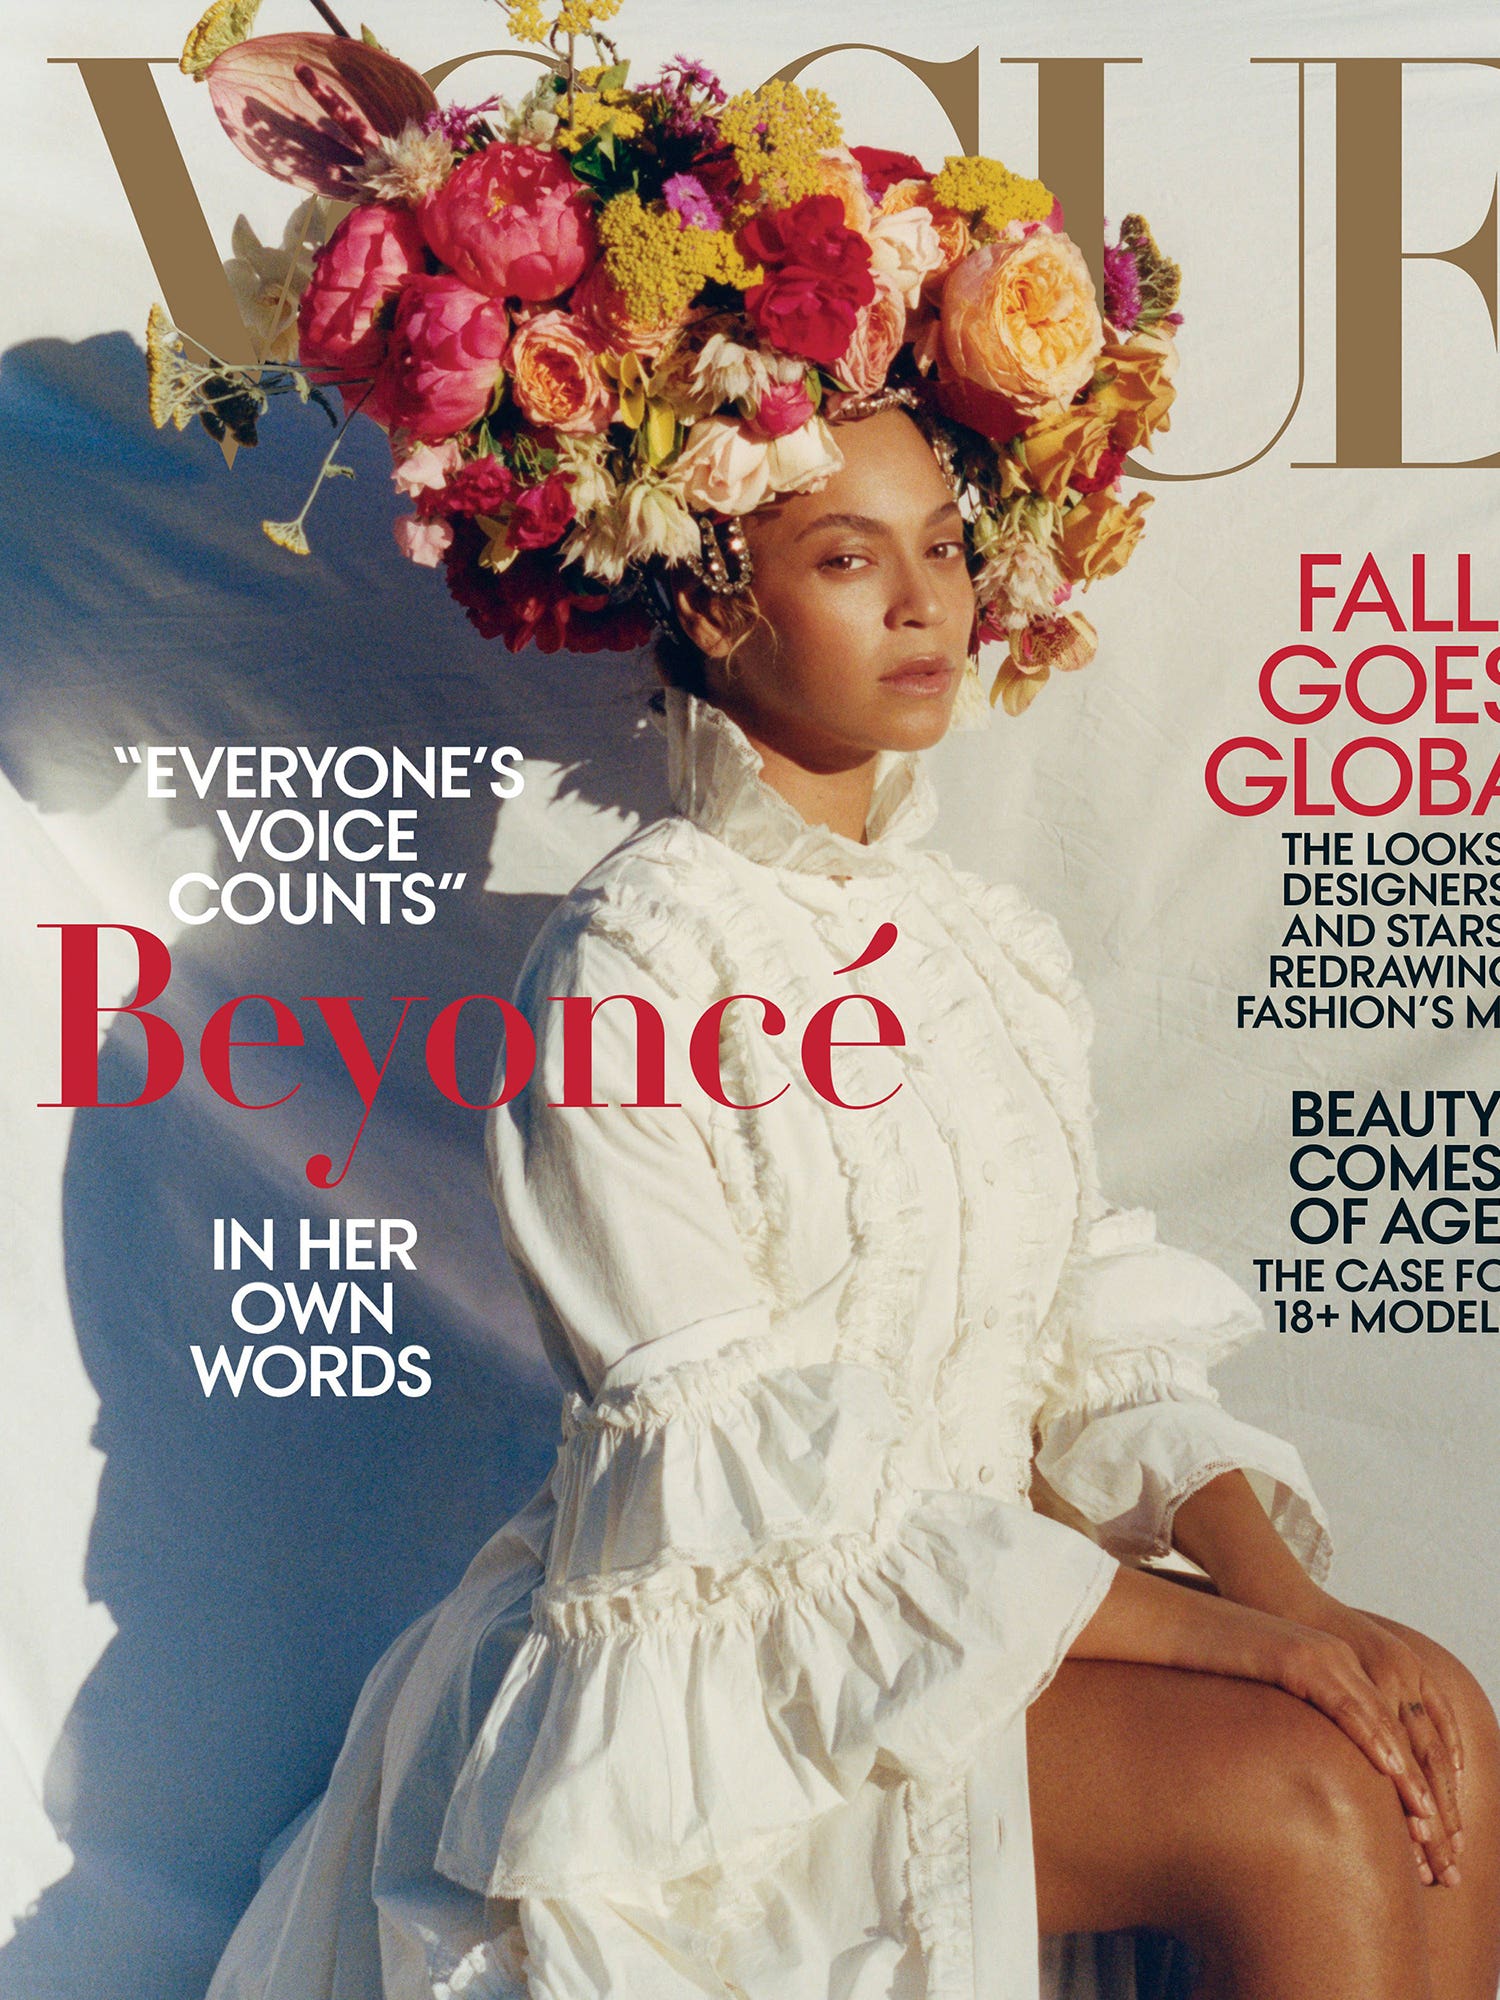 Vogue with Beyoncé cover